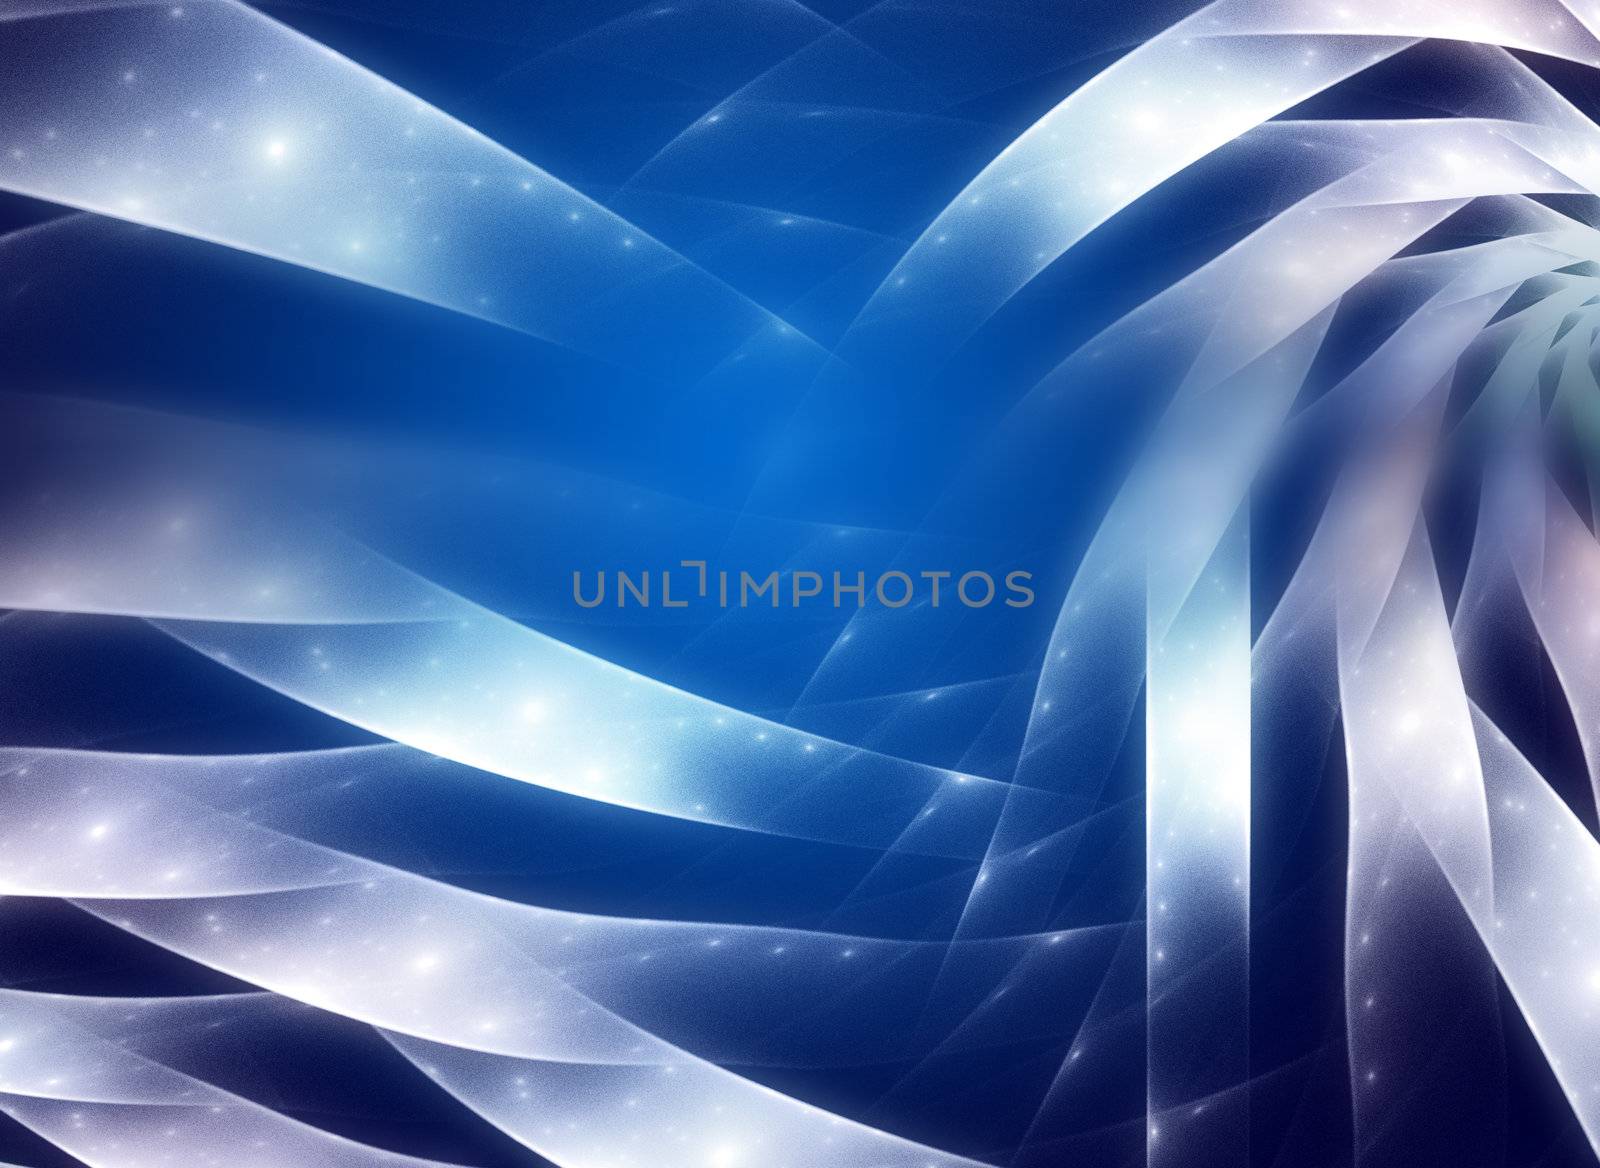 Technological design abstract blue background, fiber optics.
Sug by FernandoCortes